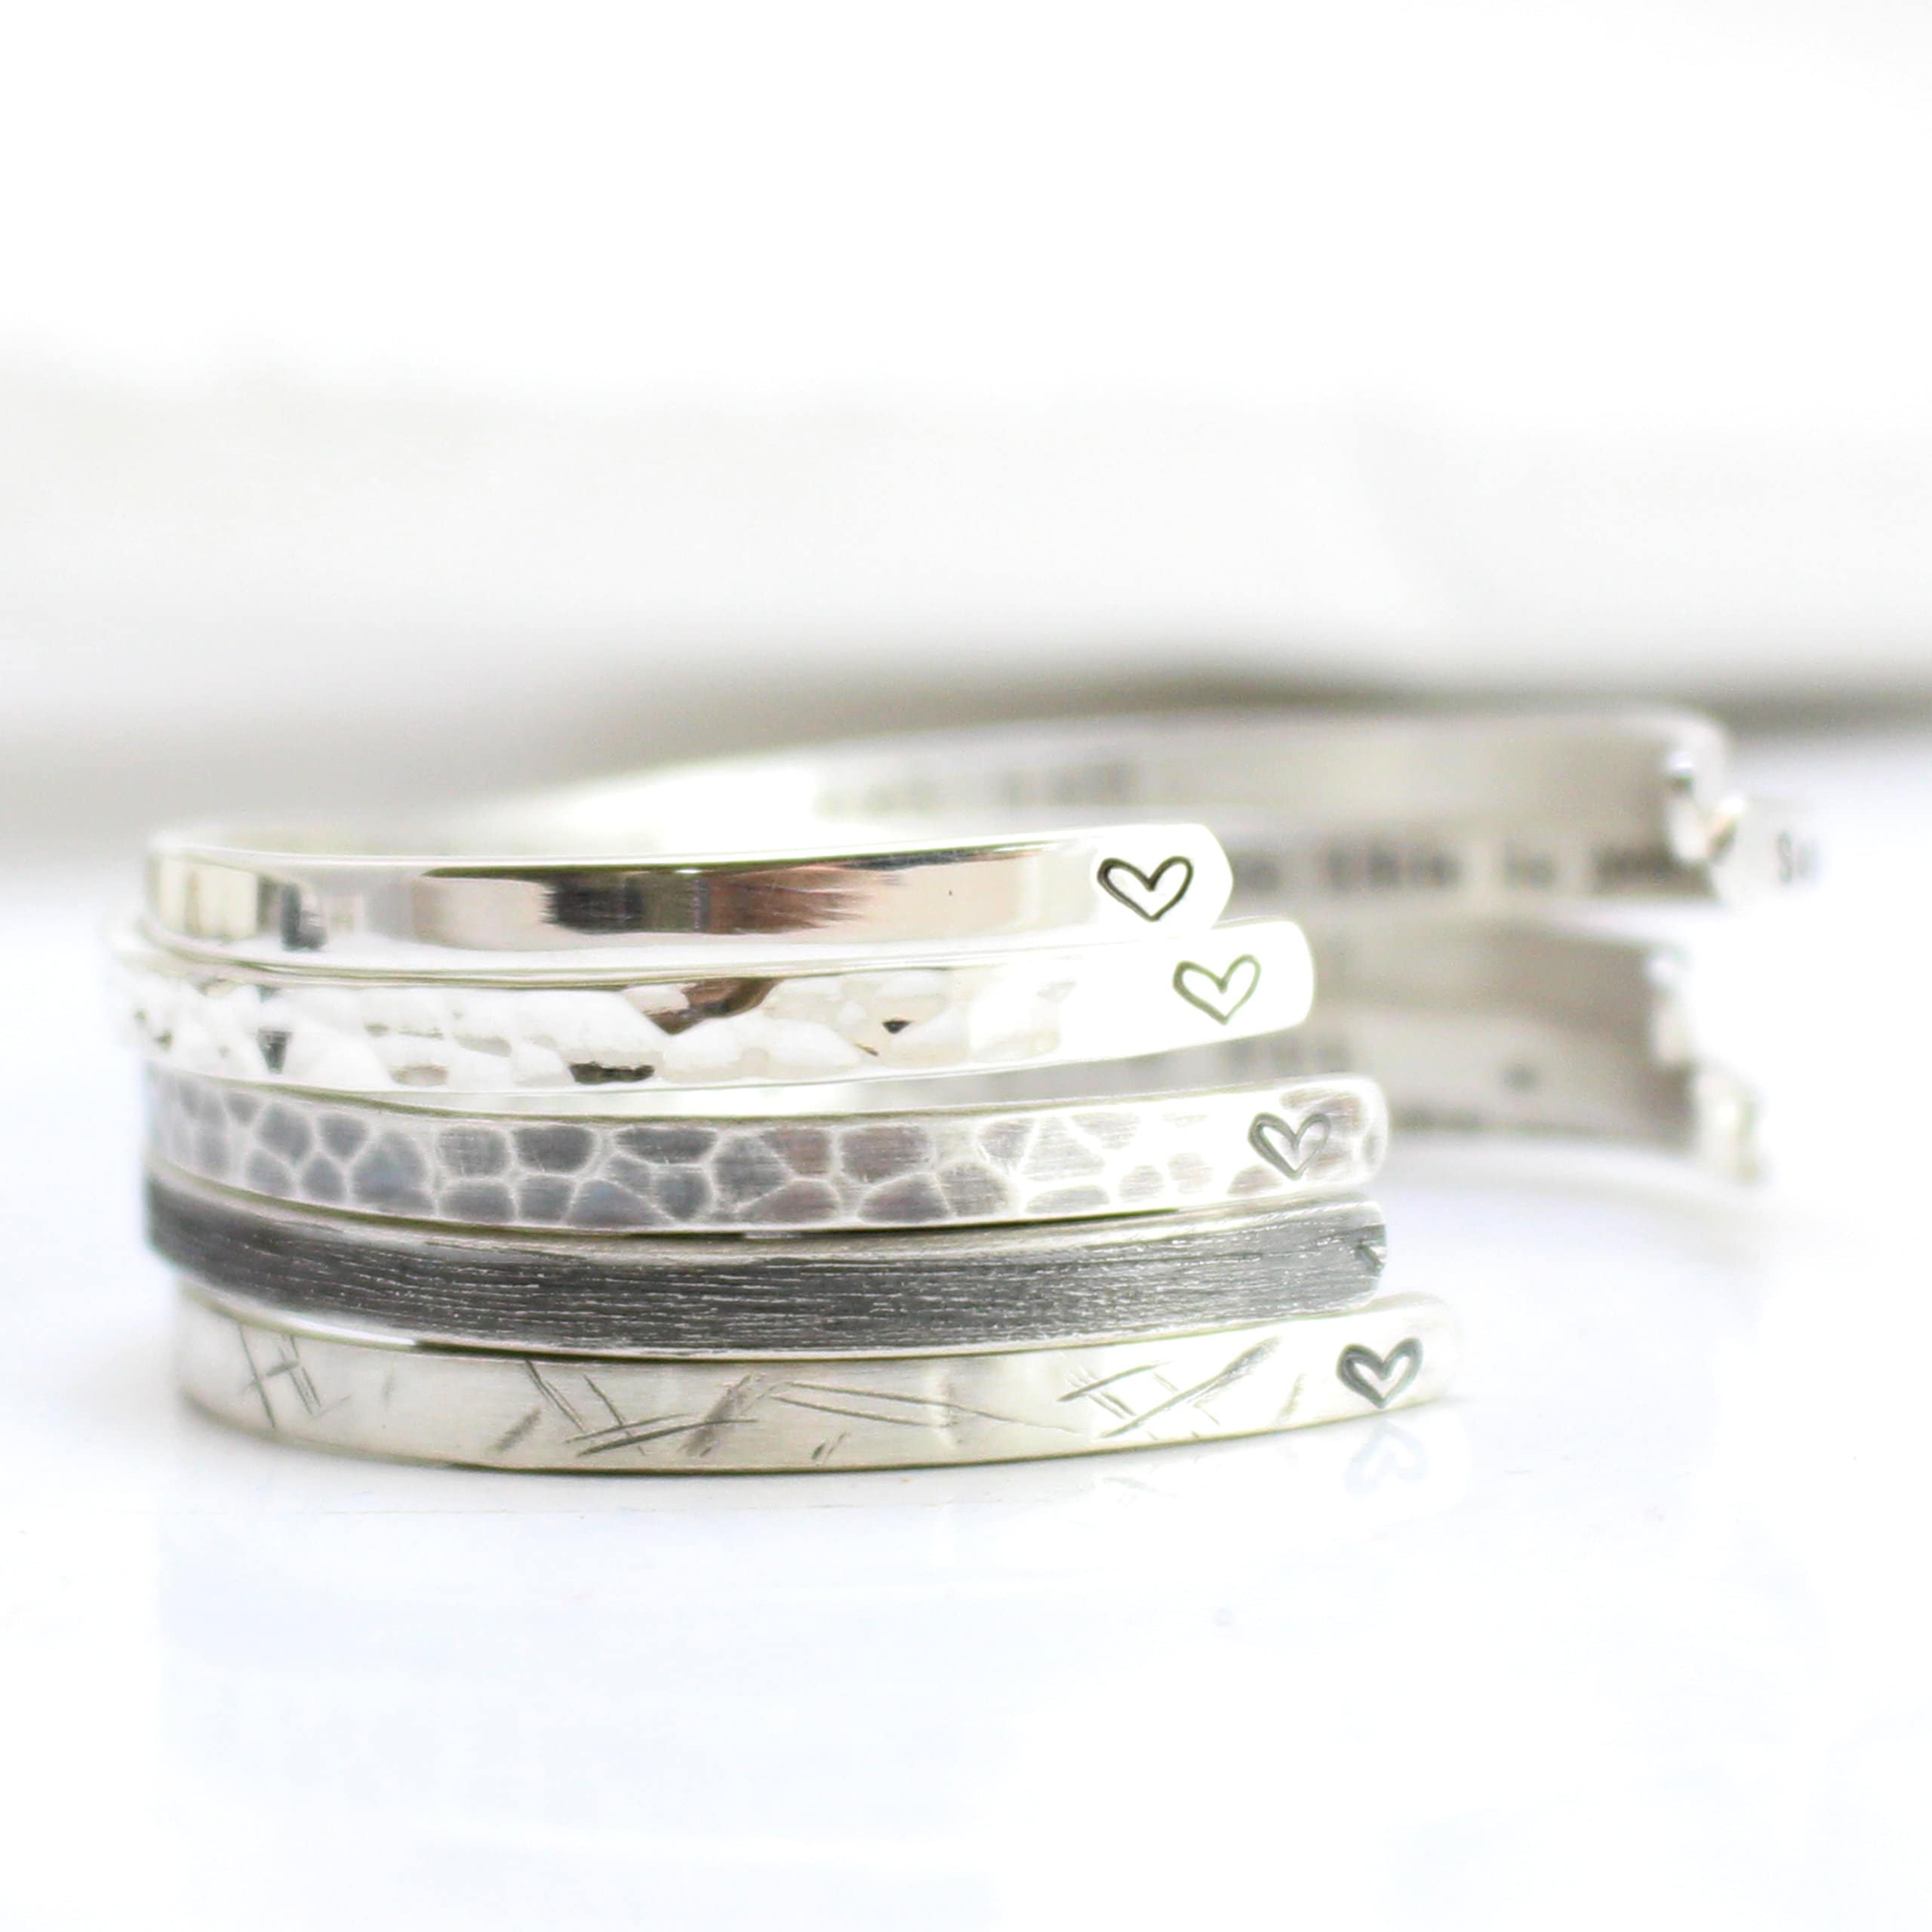 Get Personalized Engraved Bracelet Online in India  Nutcase